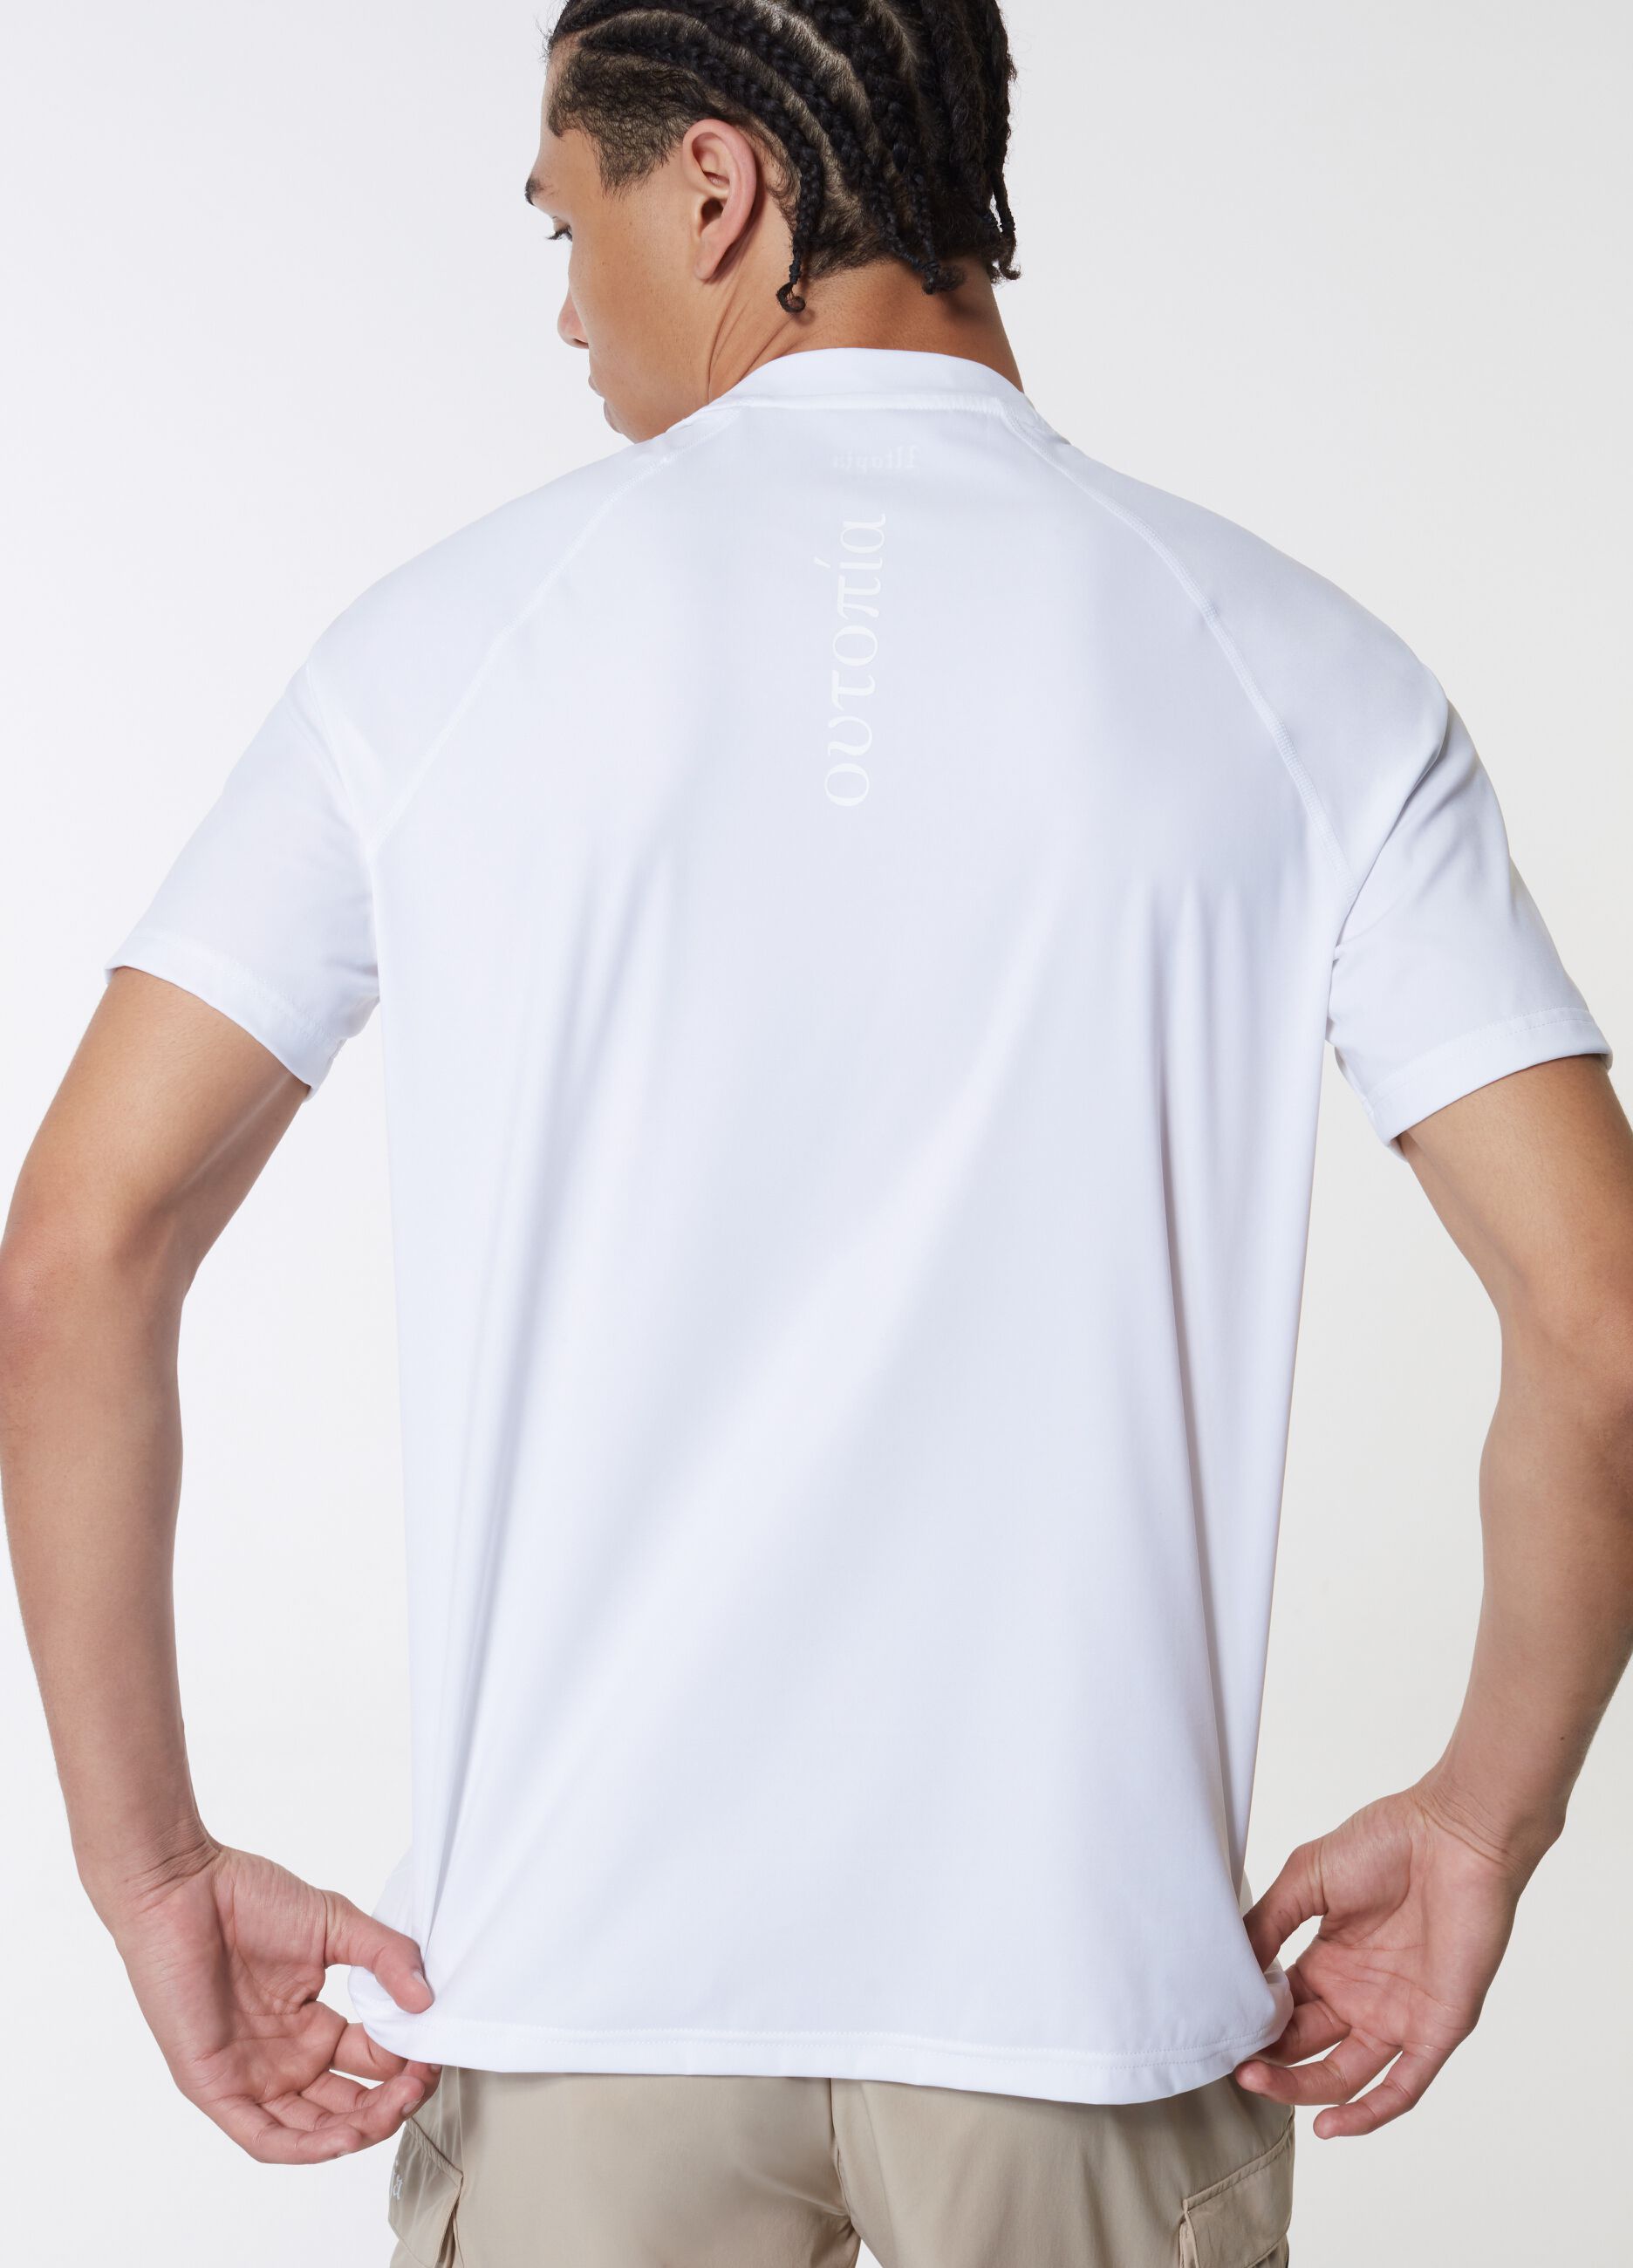 Technical T-shirt White_0